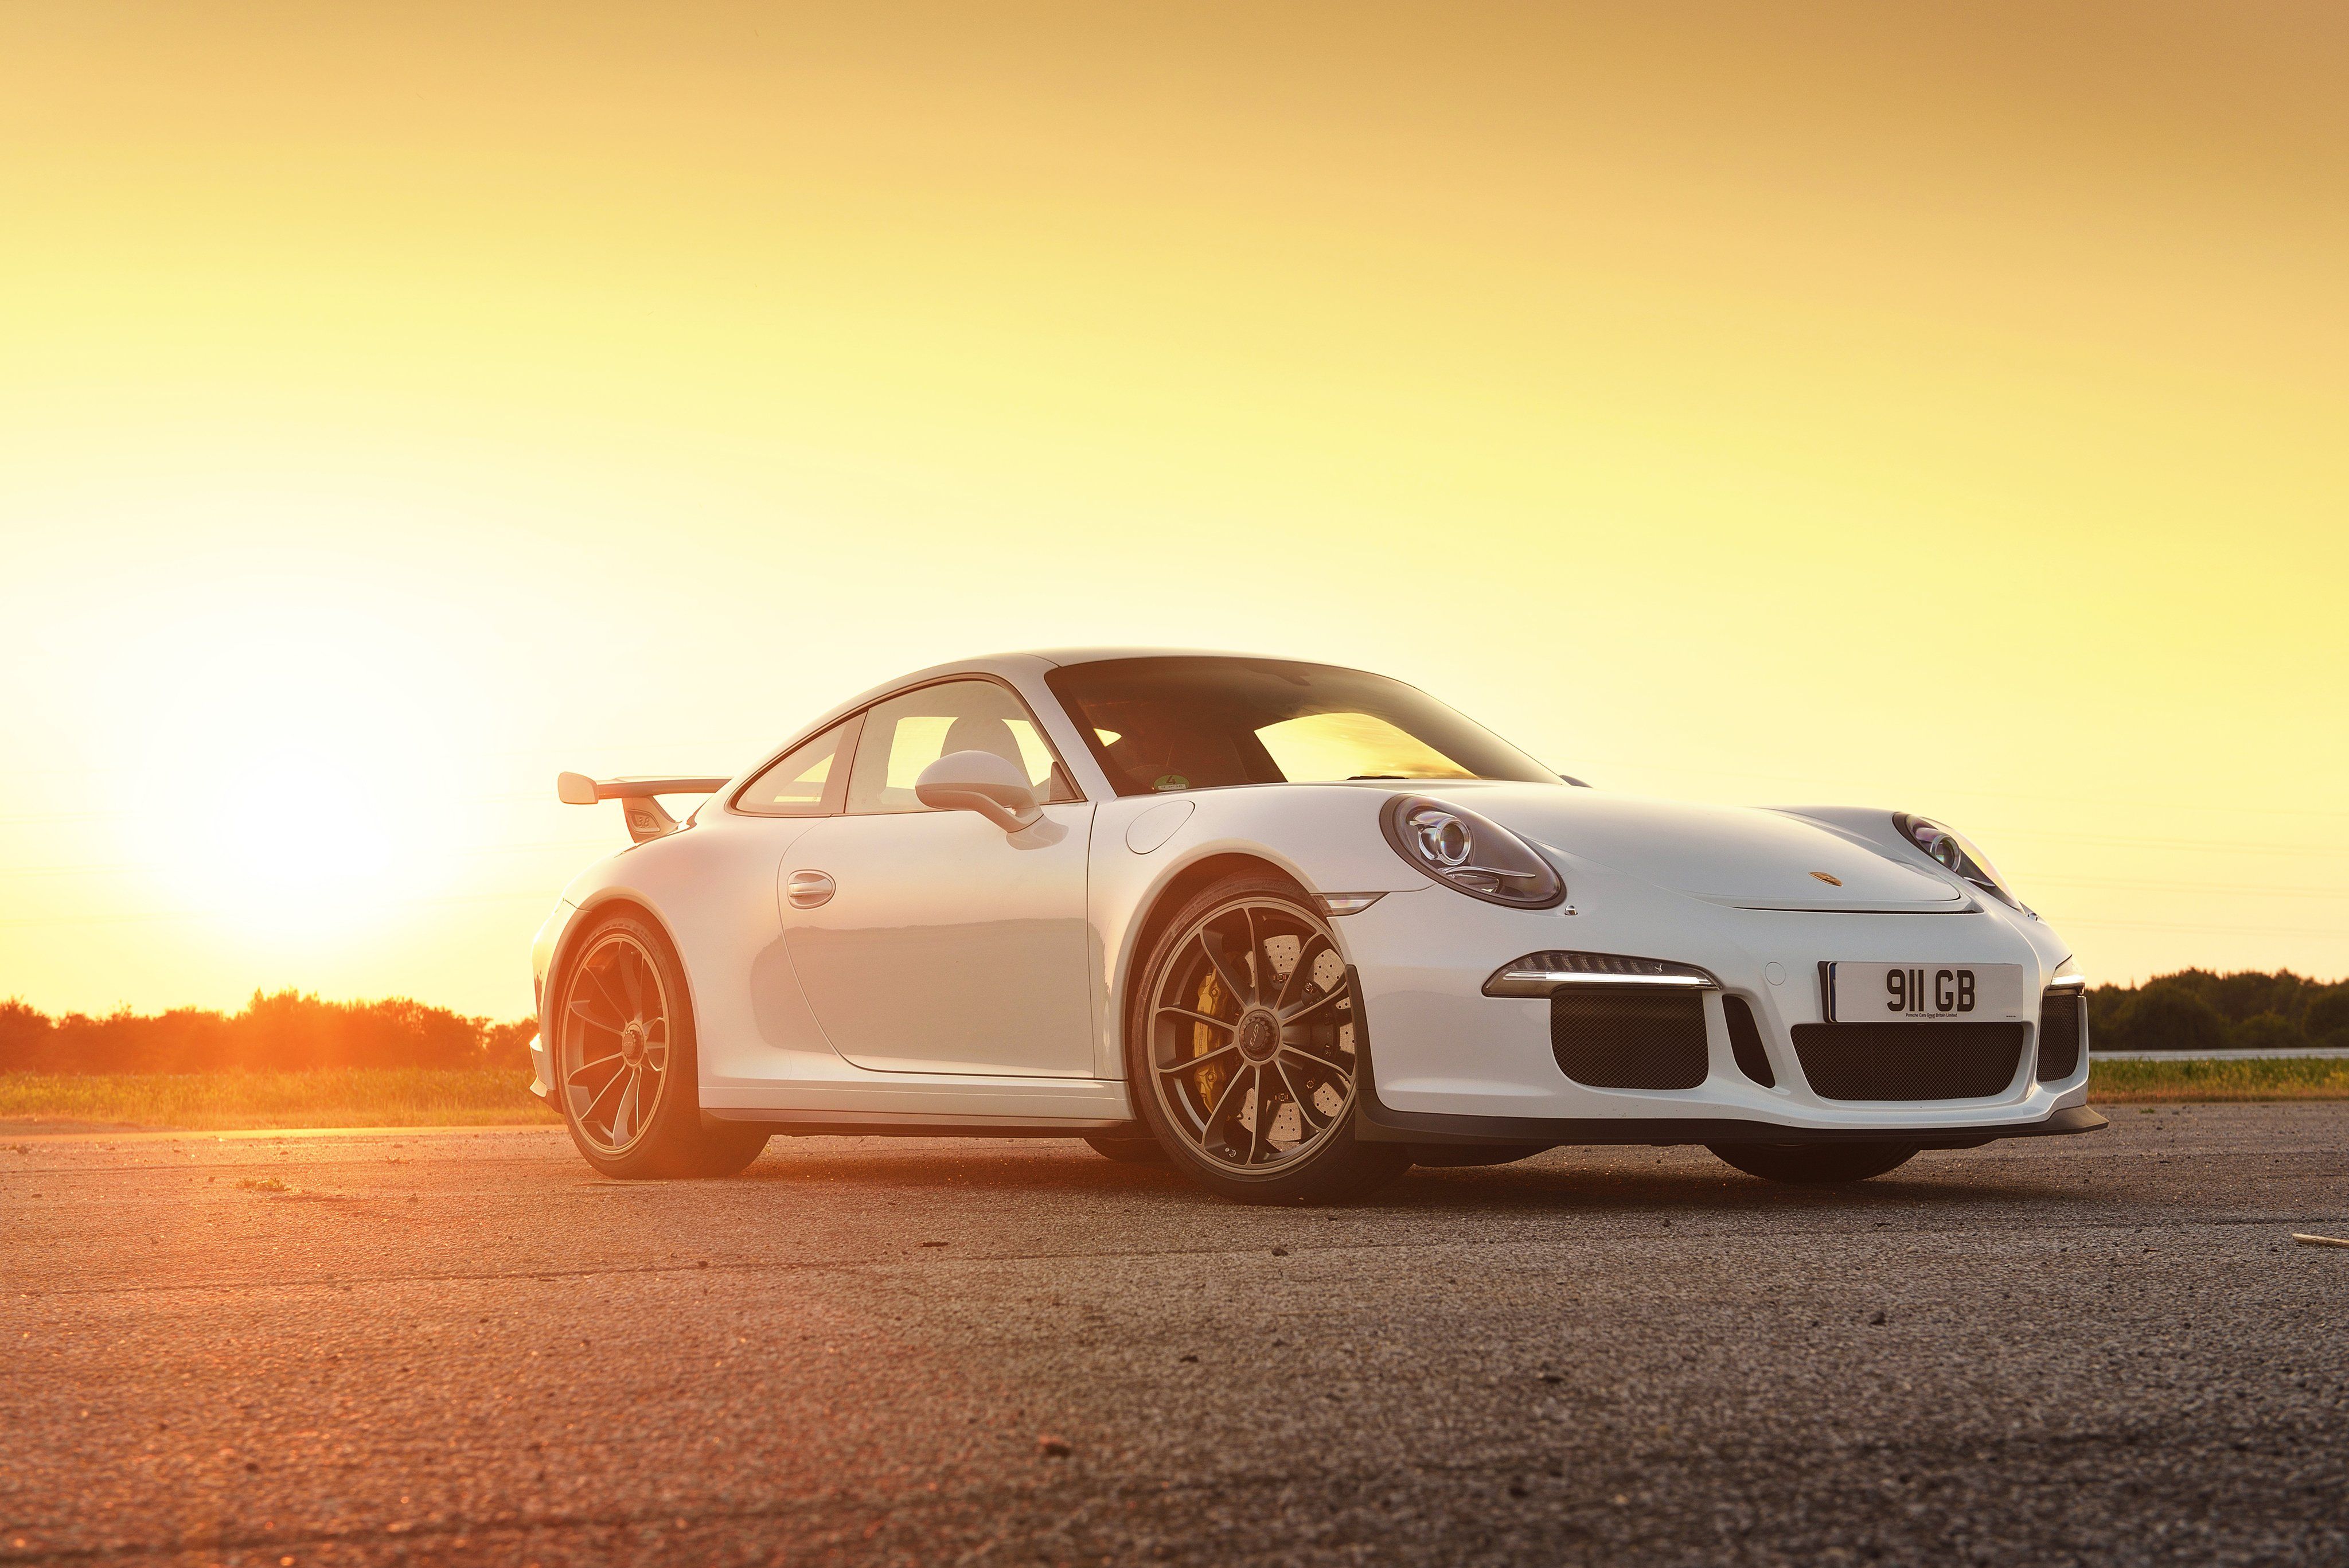 2014 Porsche 911 GT3 UK spec 991 wallpaper 4096x2734 619288